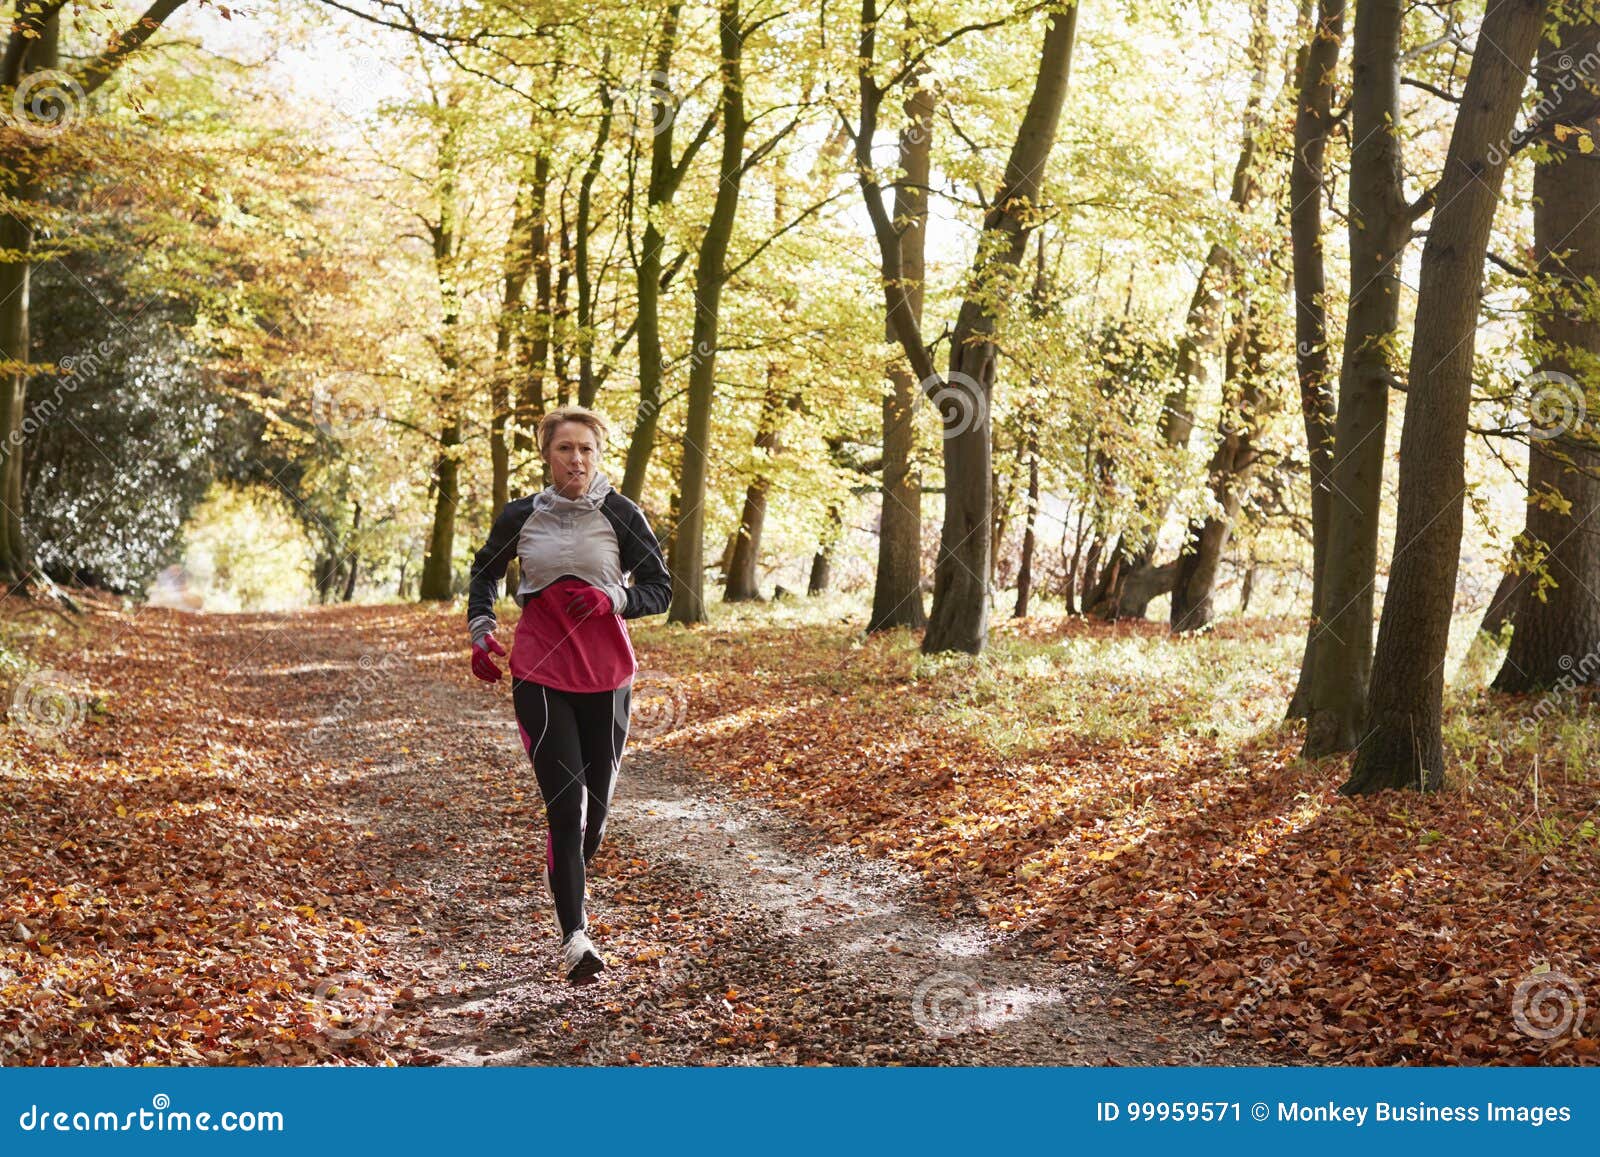 Mature Woman Running through Autumn Woodland Stock Image - Image of ...